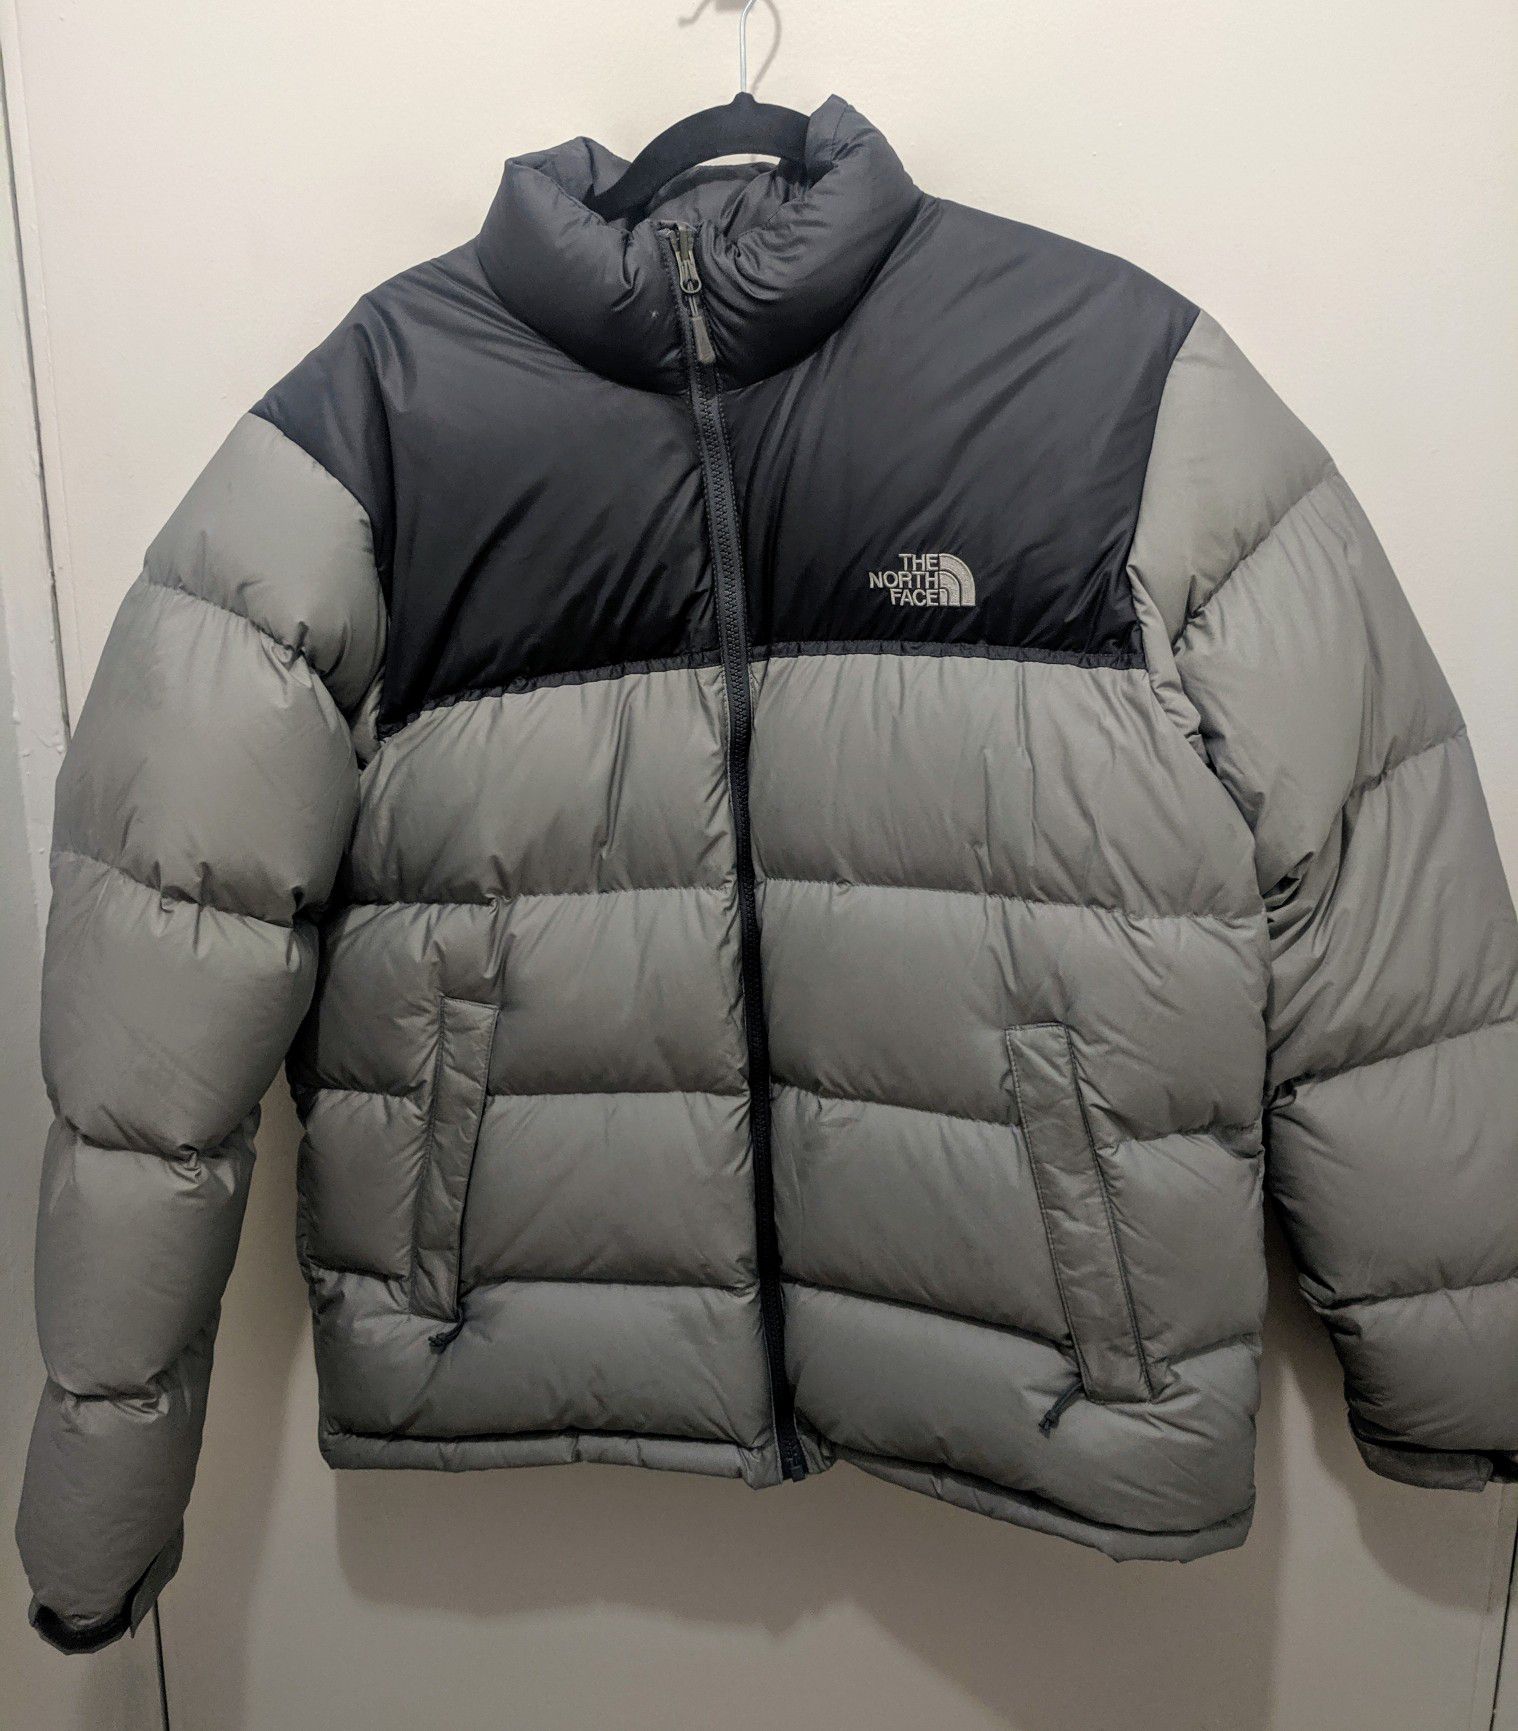 The North Face Puffer Jacket - Men's 1996 Retro Nuptse Jacket